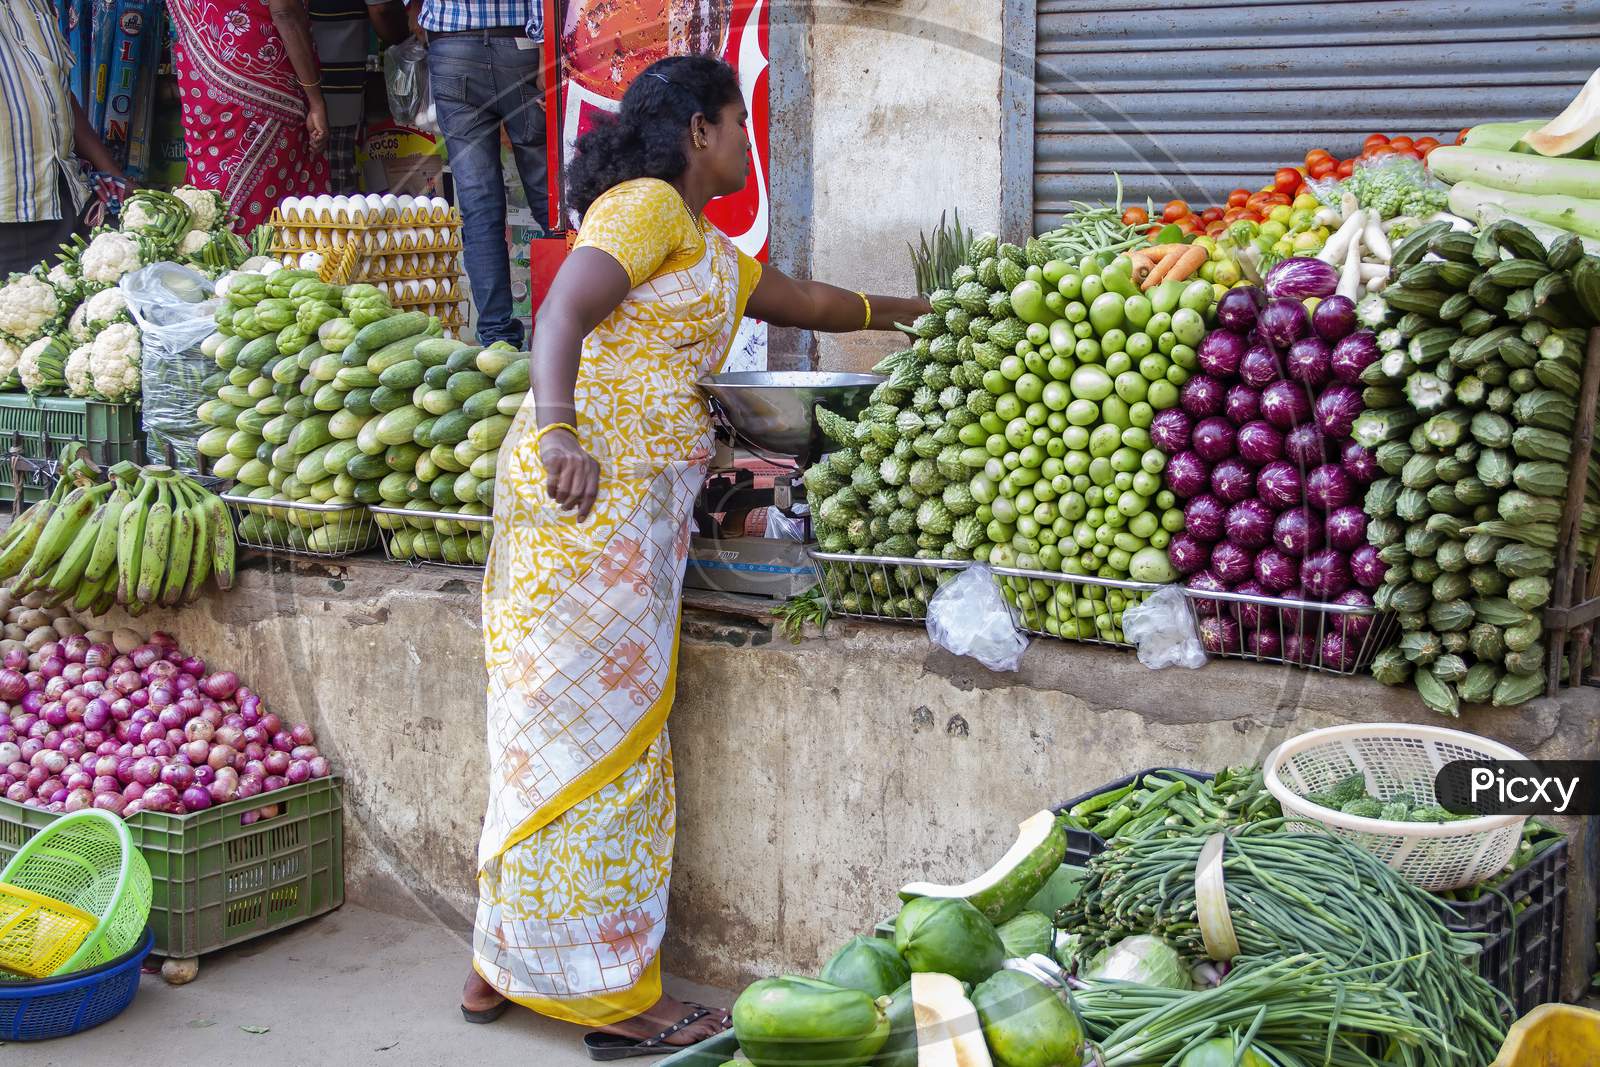 Lady vegetable seller in Chennai,Tamil Nadu.